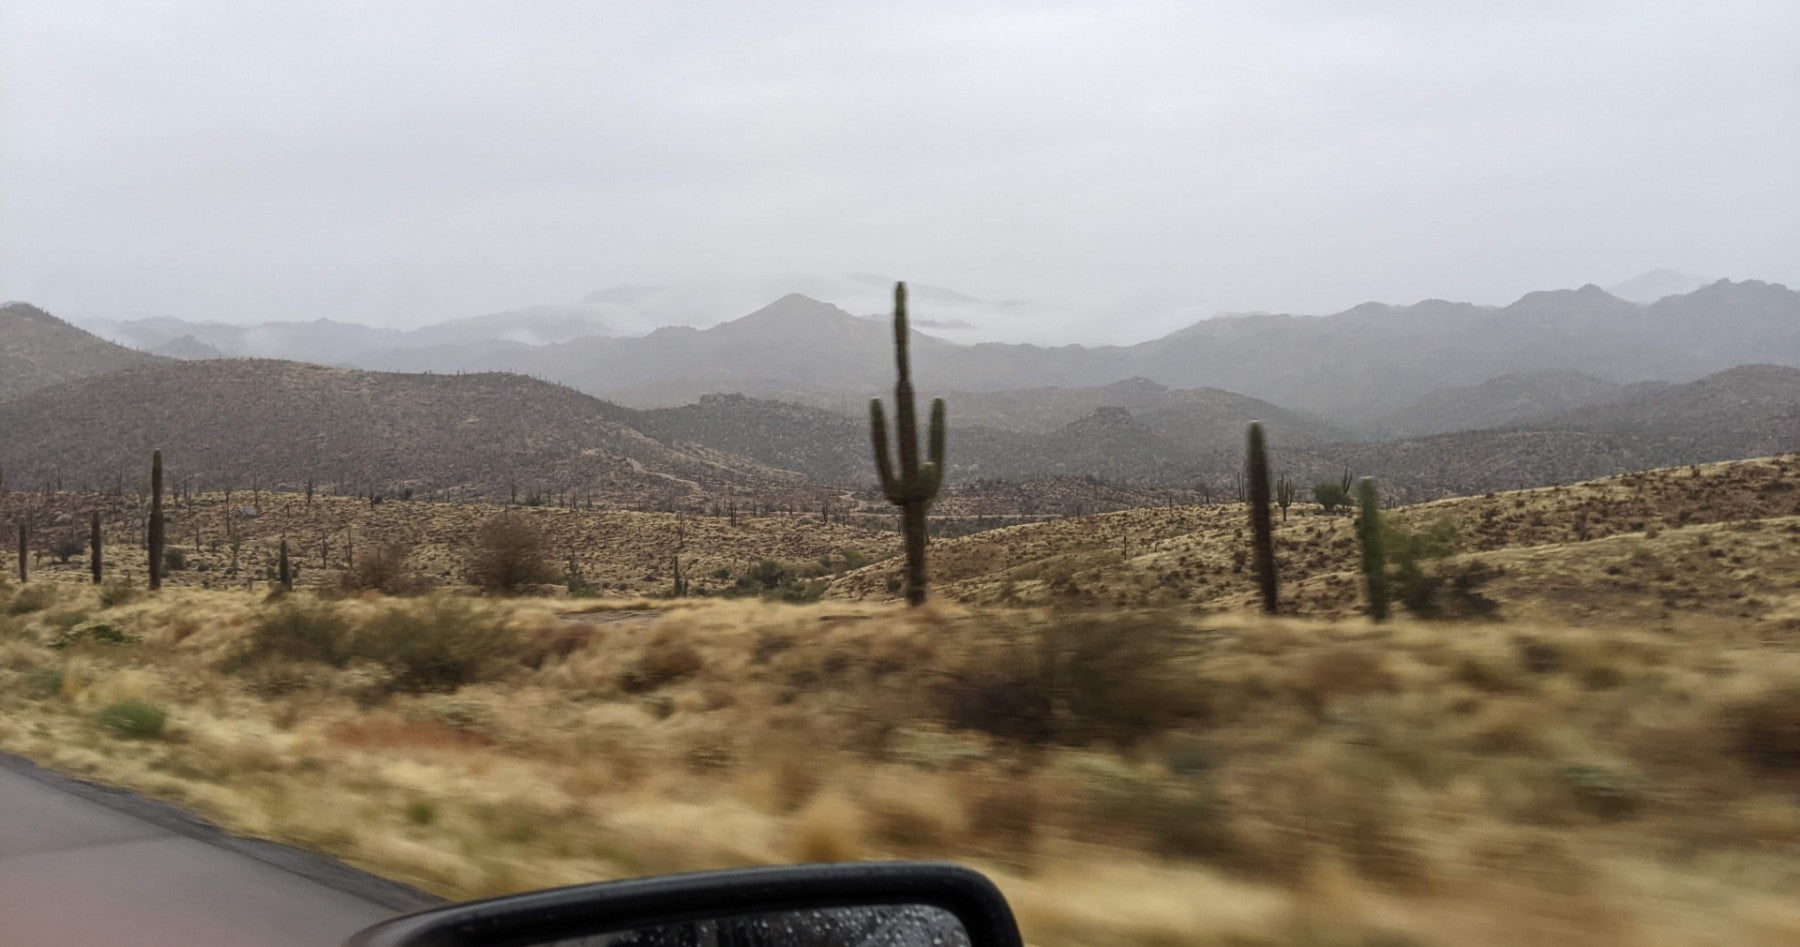 saguaro cactus in Arizona